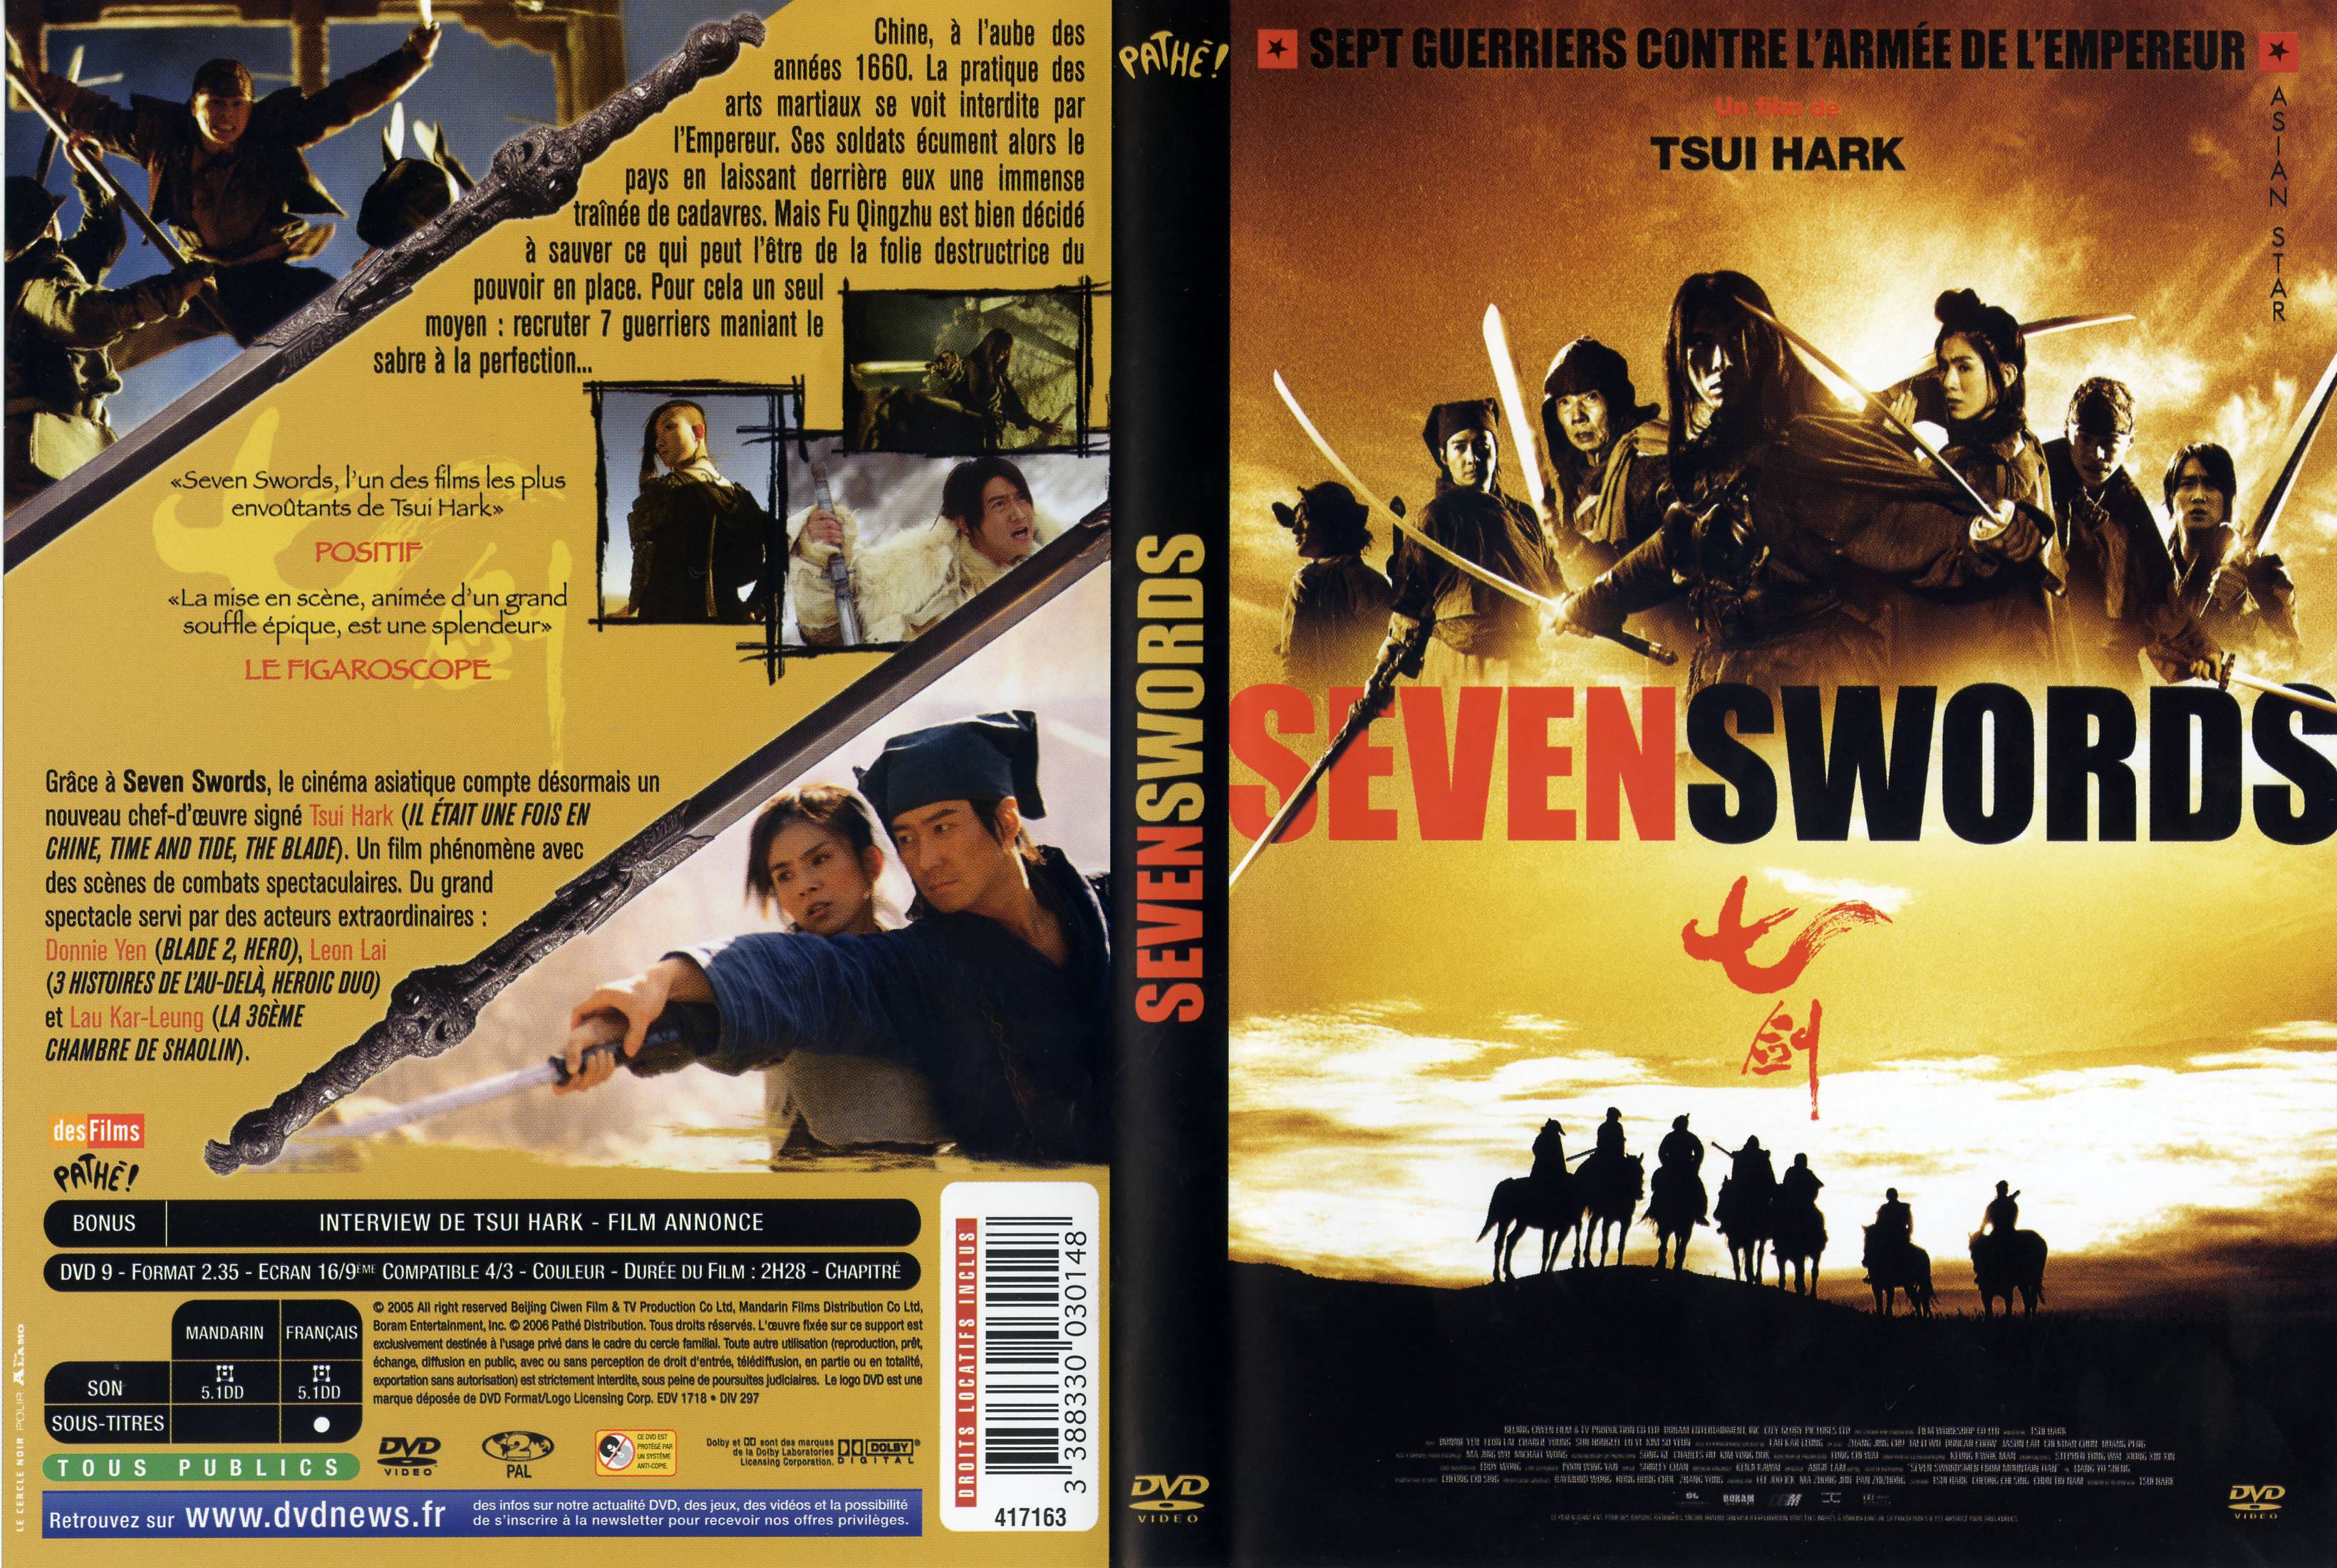 Jaquette DVD Seven swords